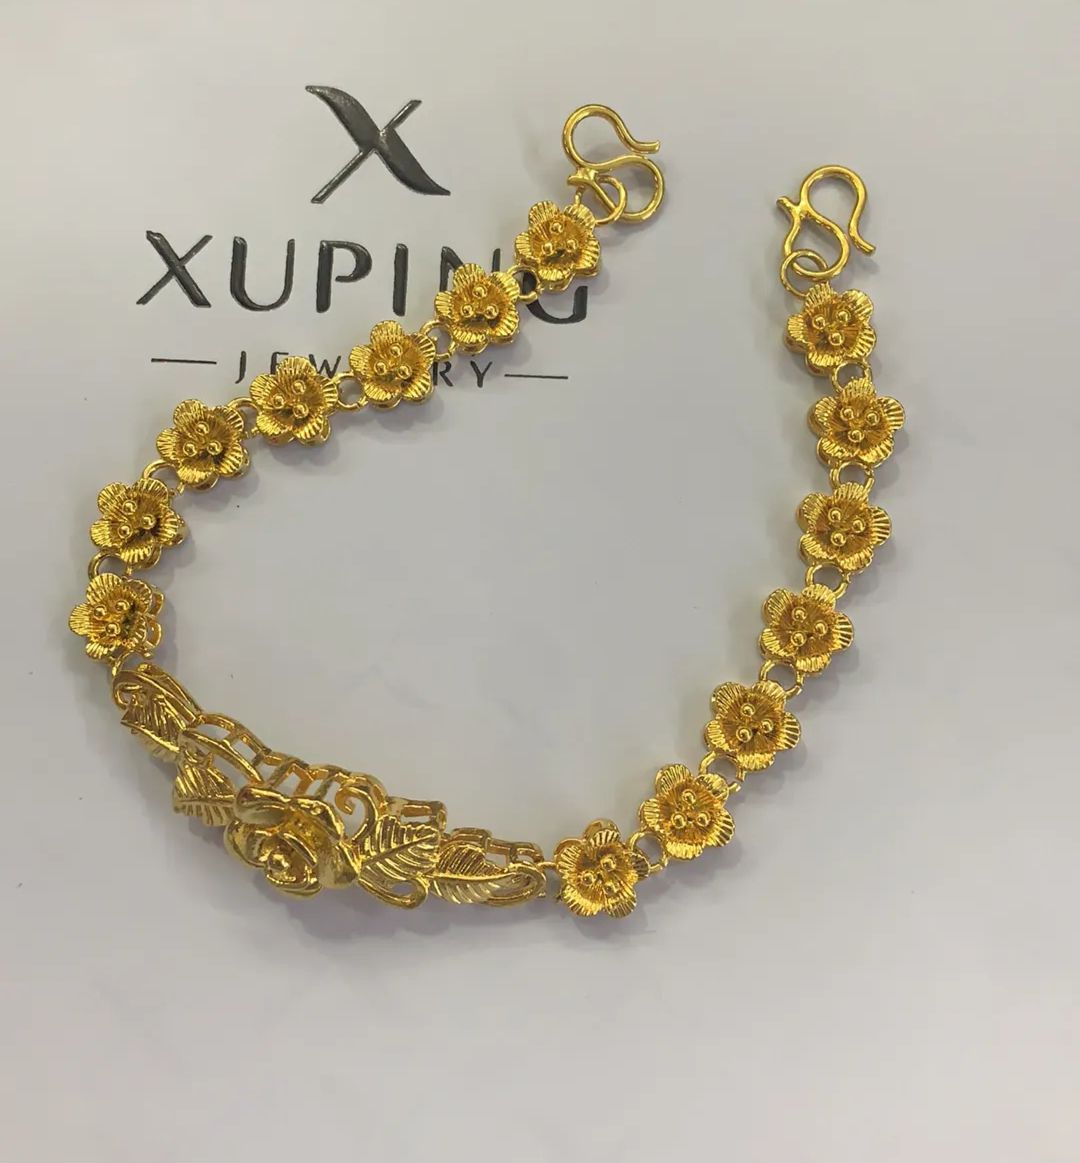 Xuping Jewelry Fashion Popular Gold Plated Bracelet With Animal Head Shape  S00166559  Bracelets  AliExpress